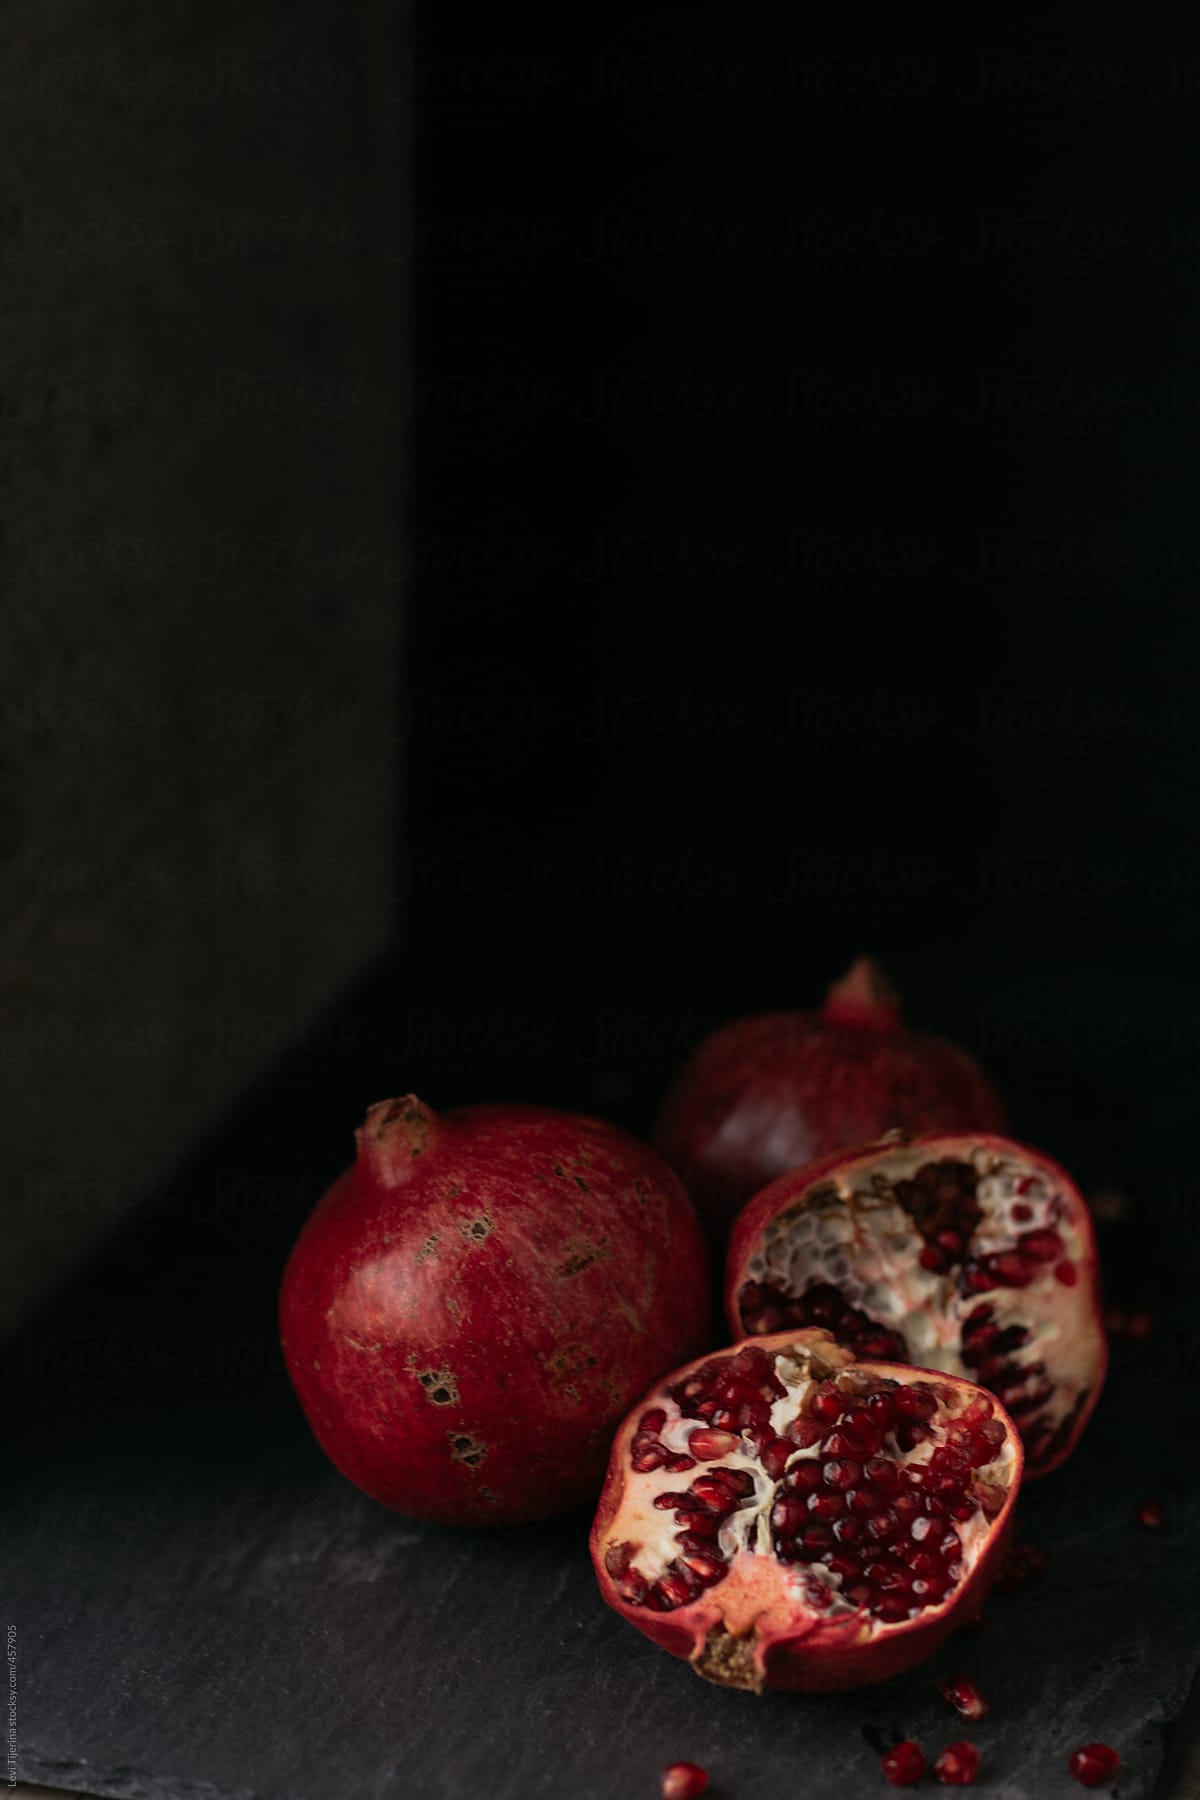 pomegranate seeds on wood table and slate